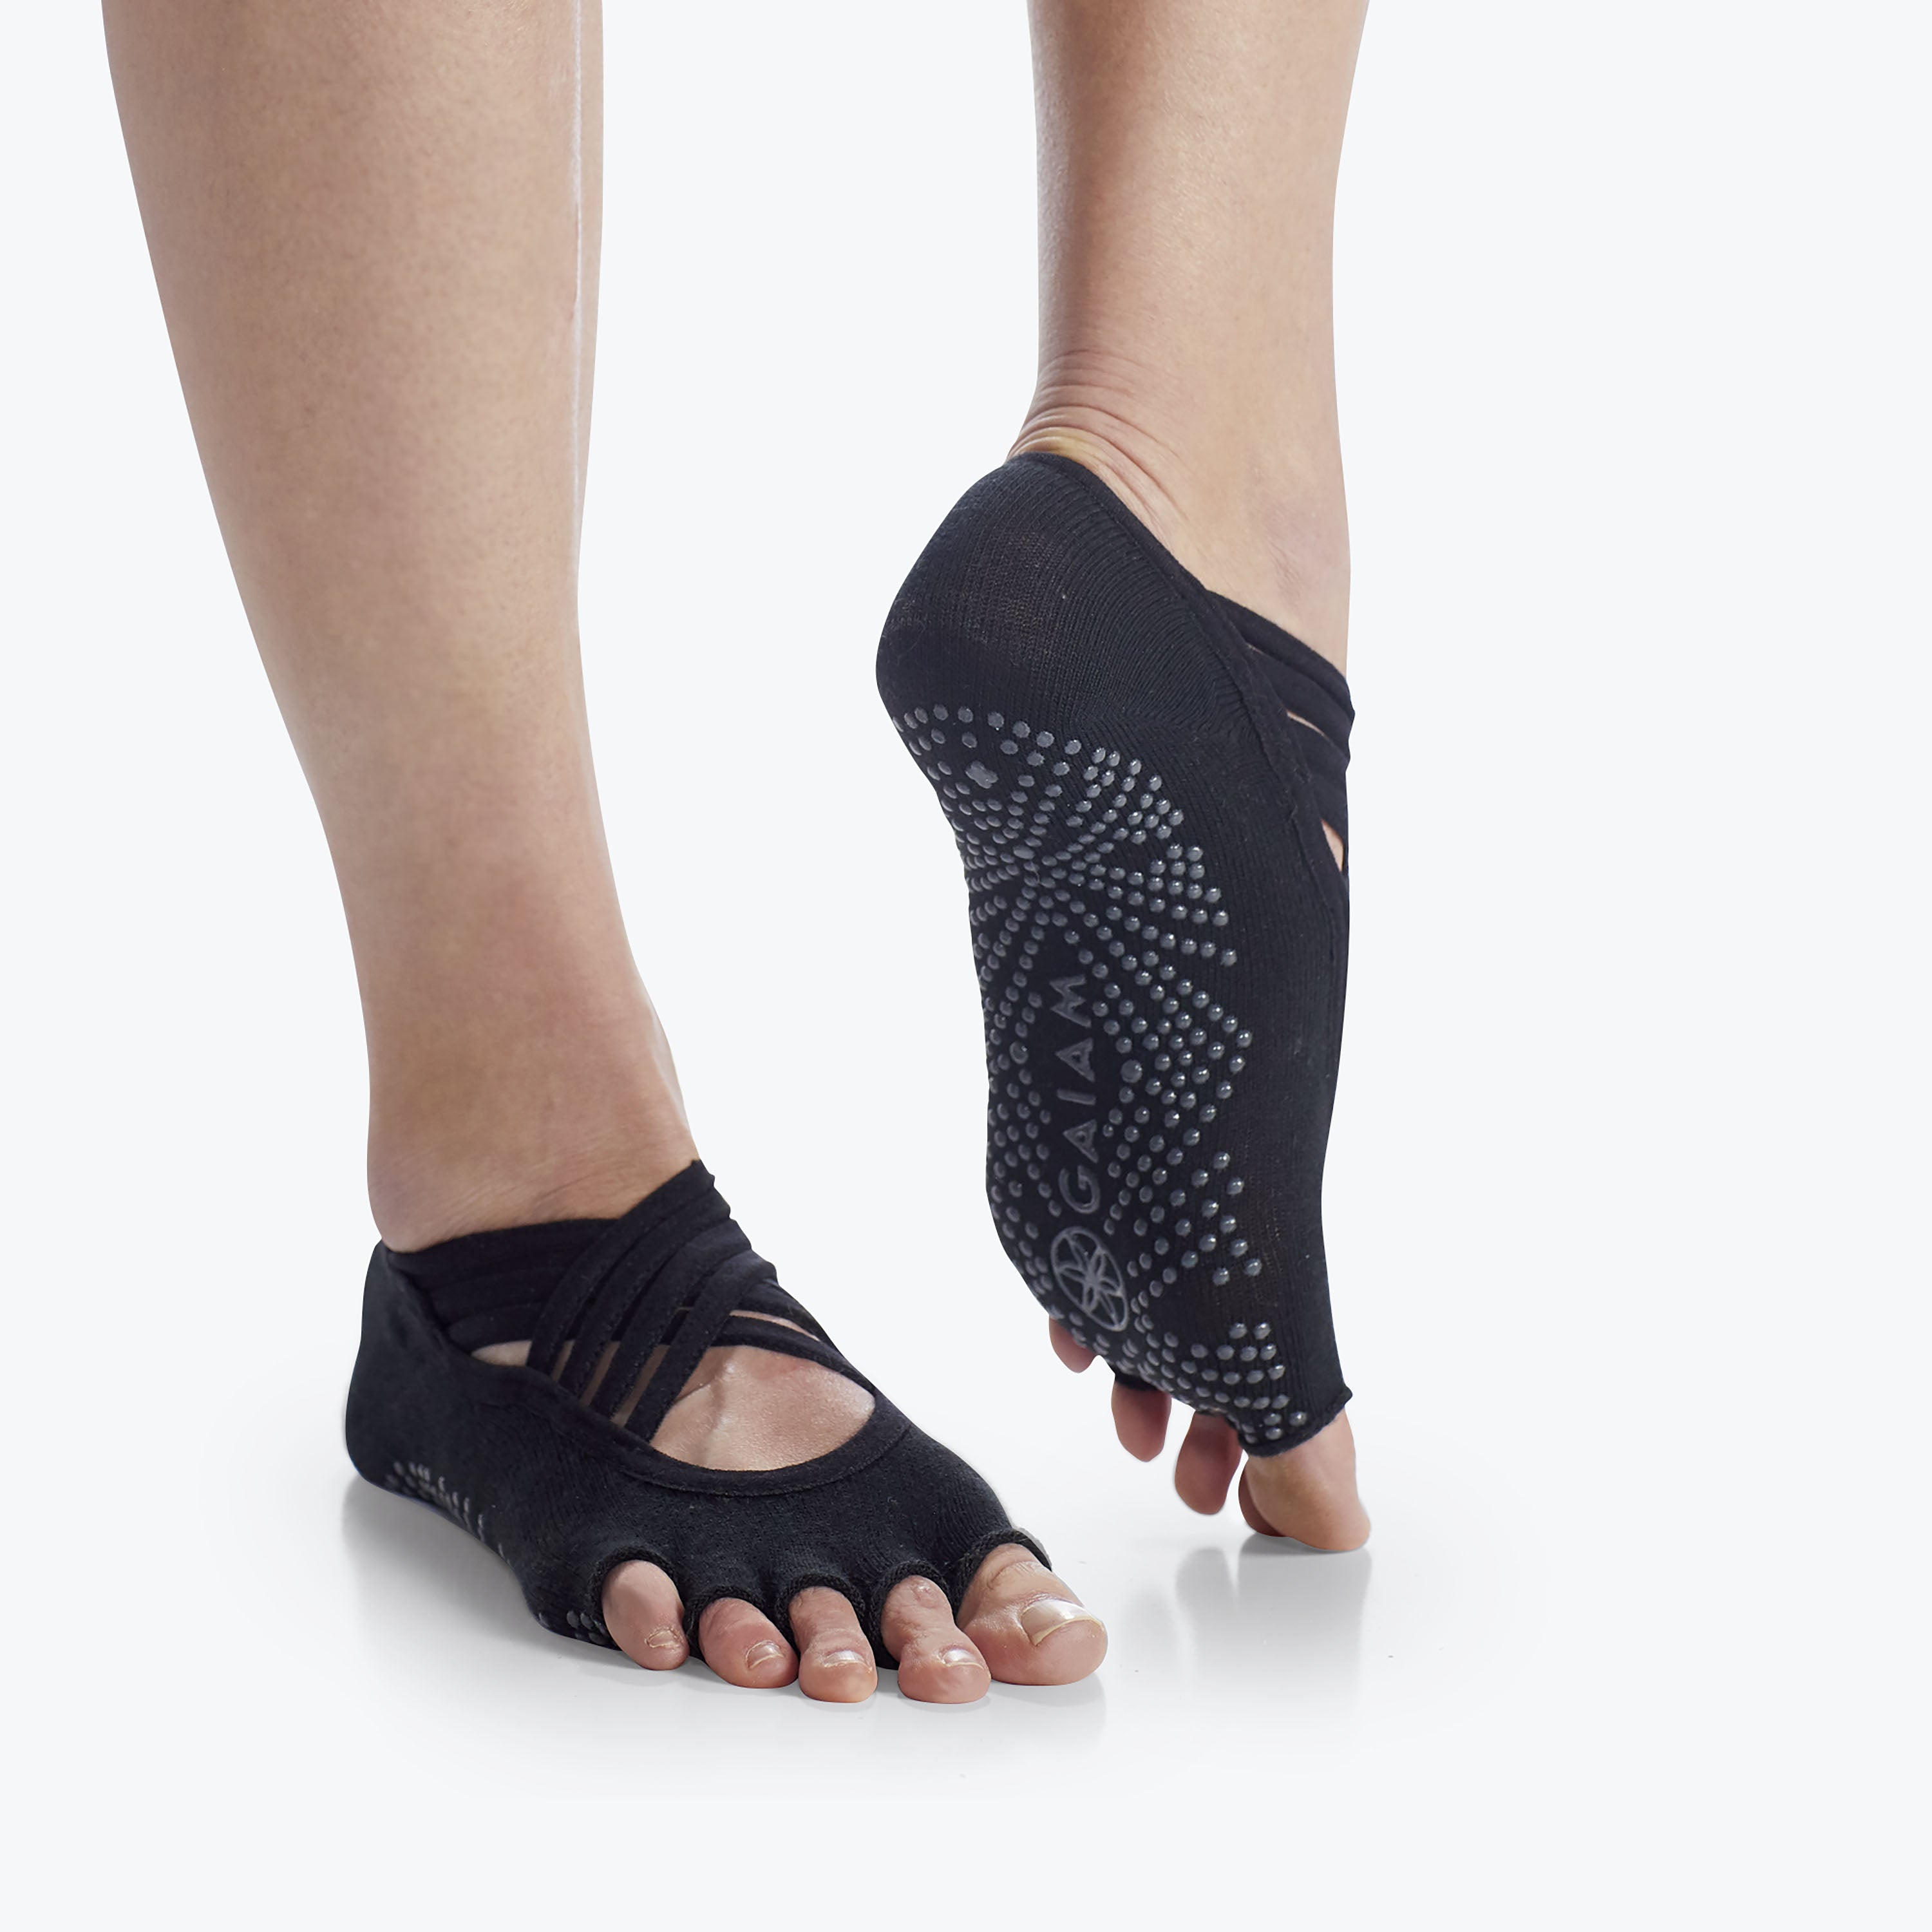 gaiam Yoga Sock Anklets - grippy Leg Warmer Ankle Socks for Yoga